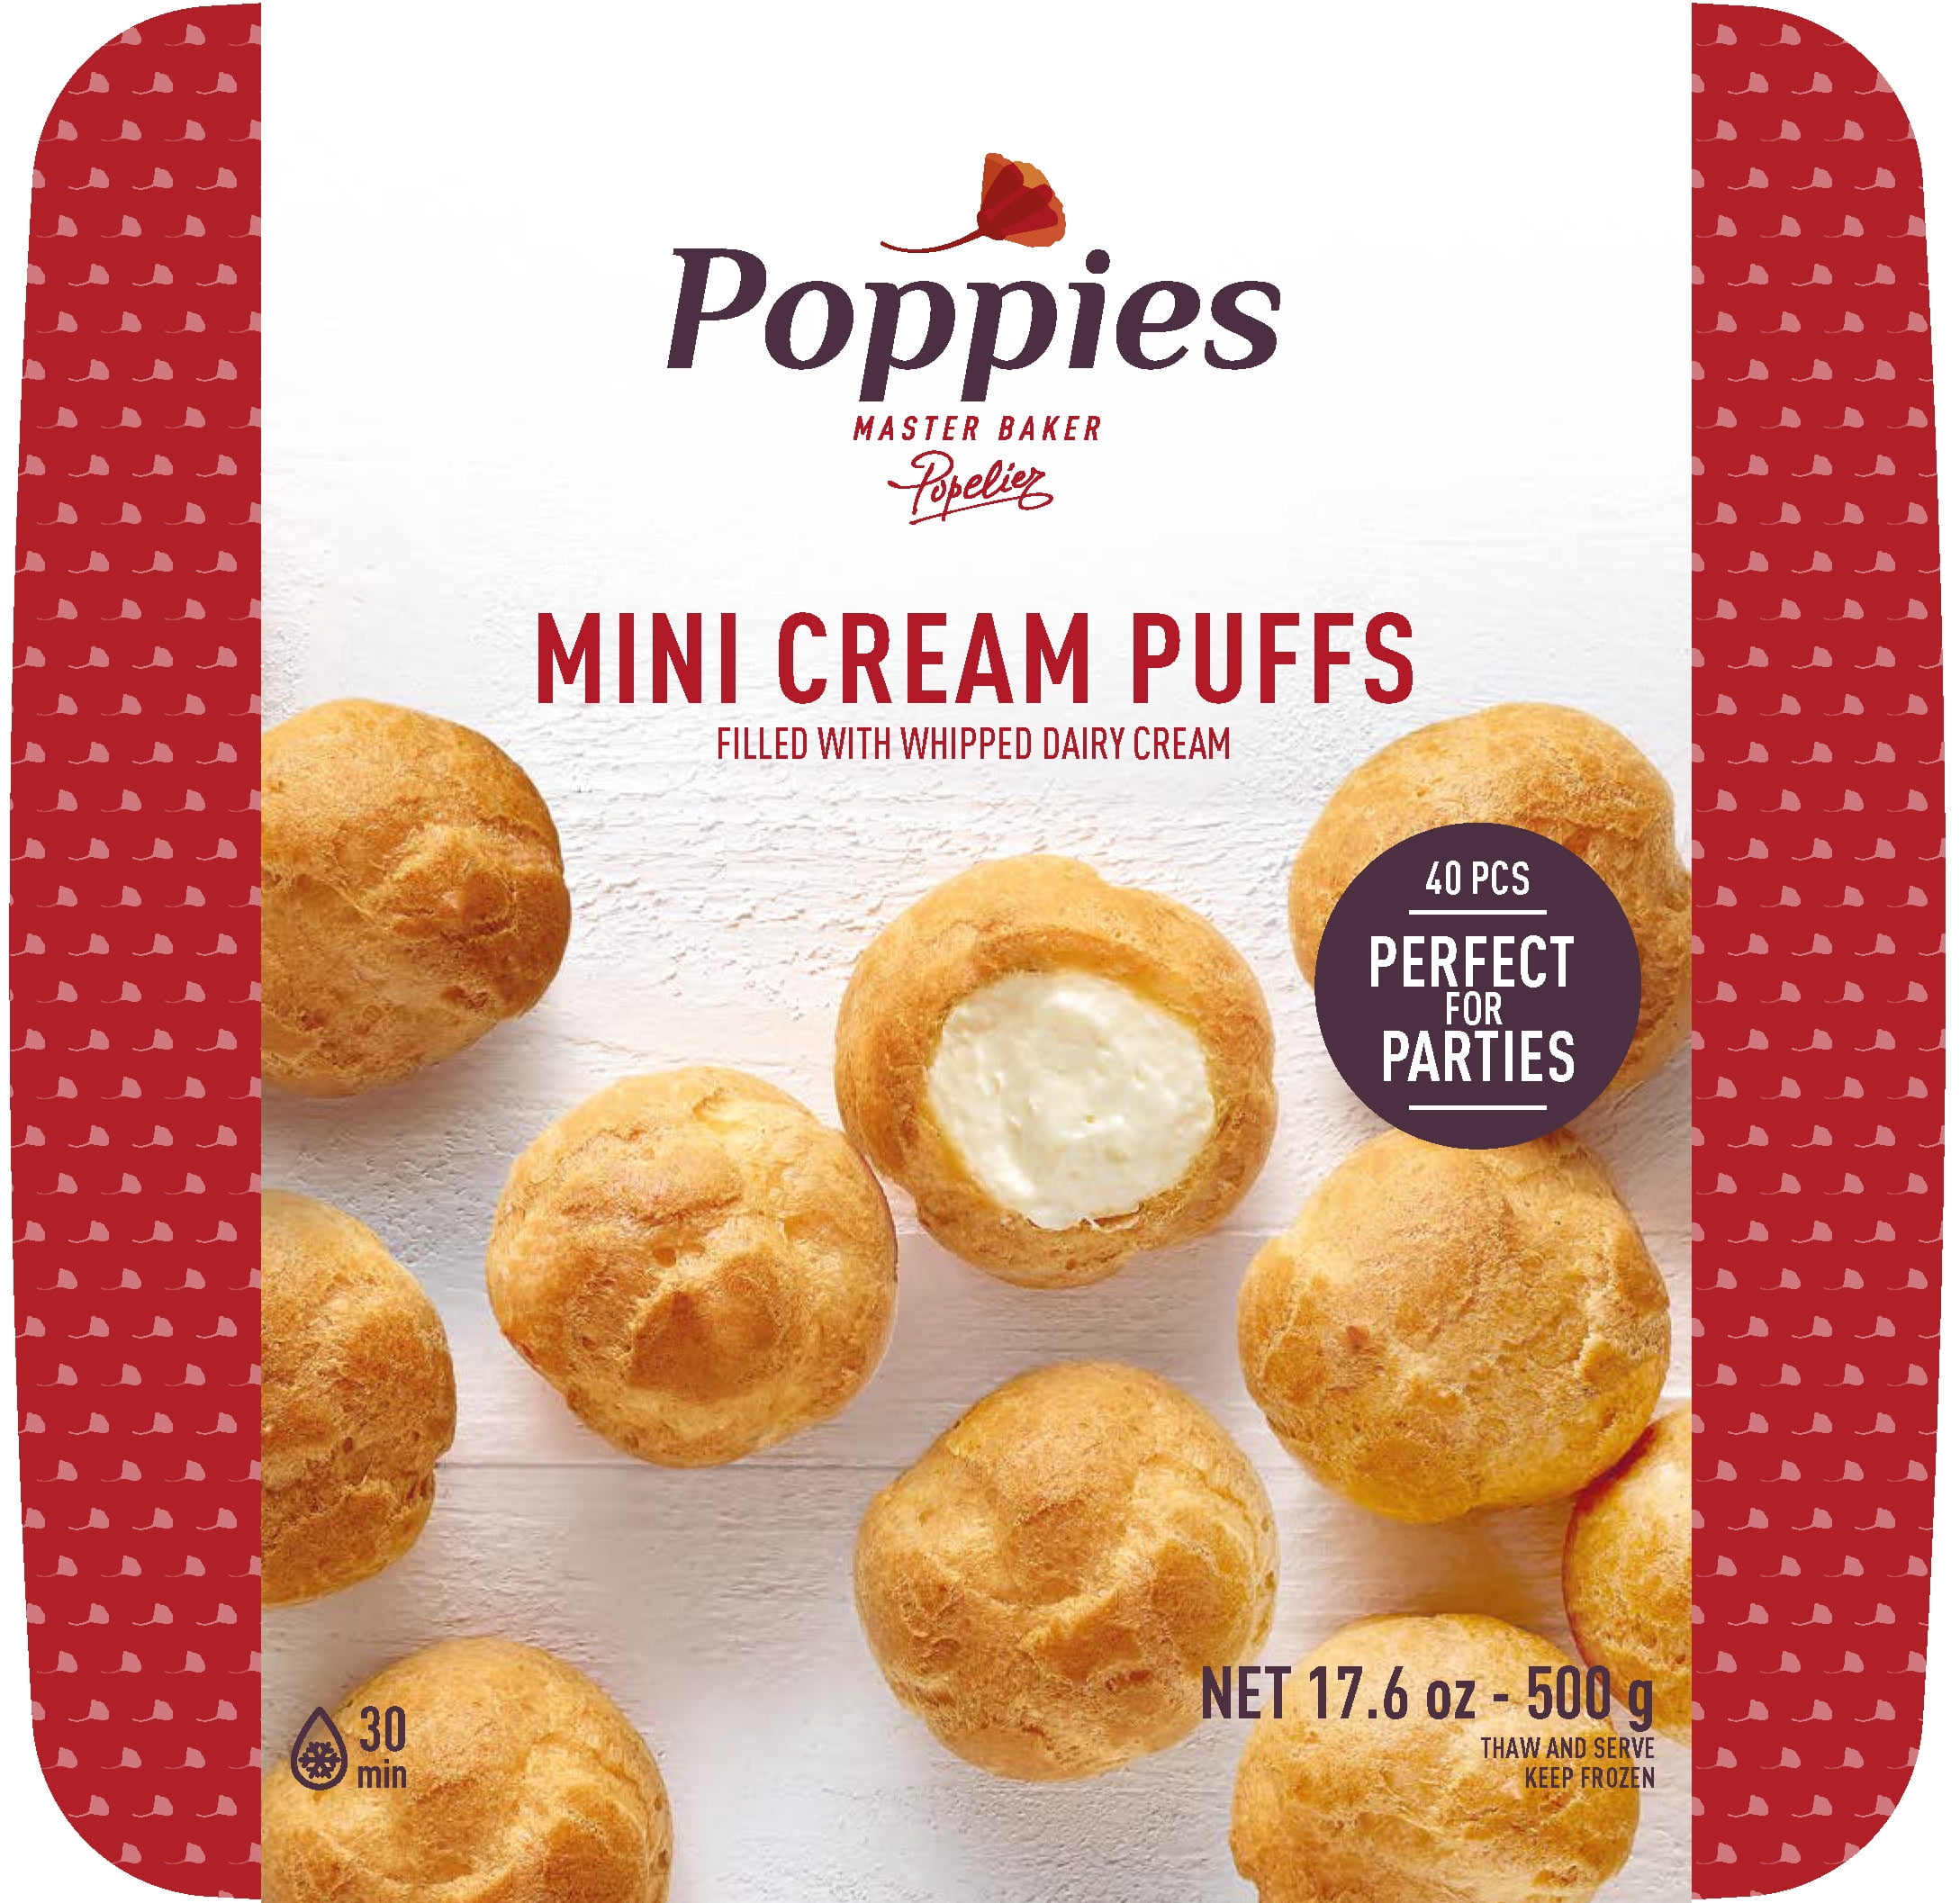 Poppies Mini Cream Puffs Oz Count Walmart Com Walmart Com